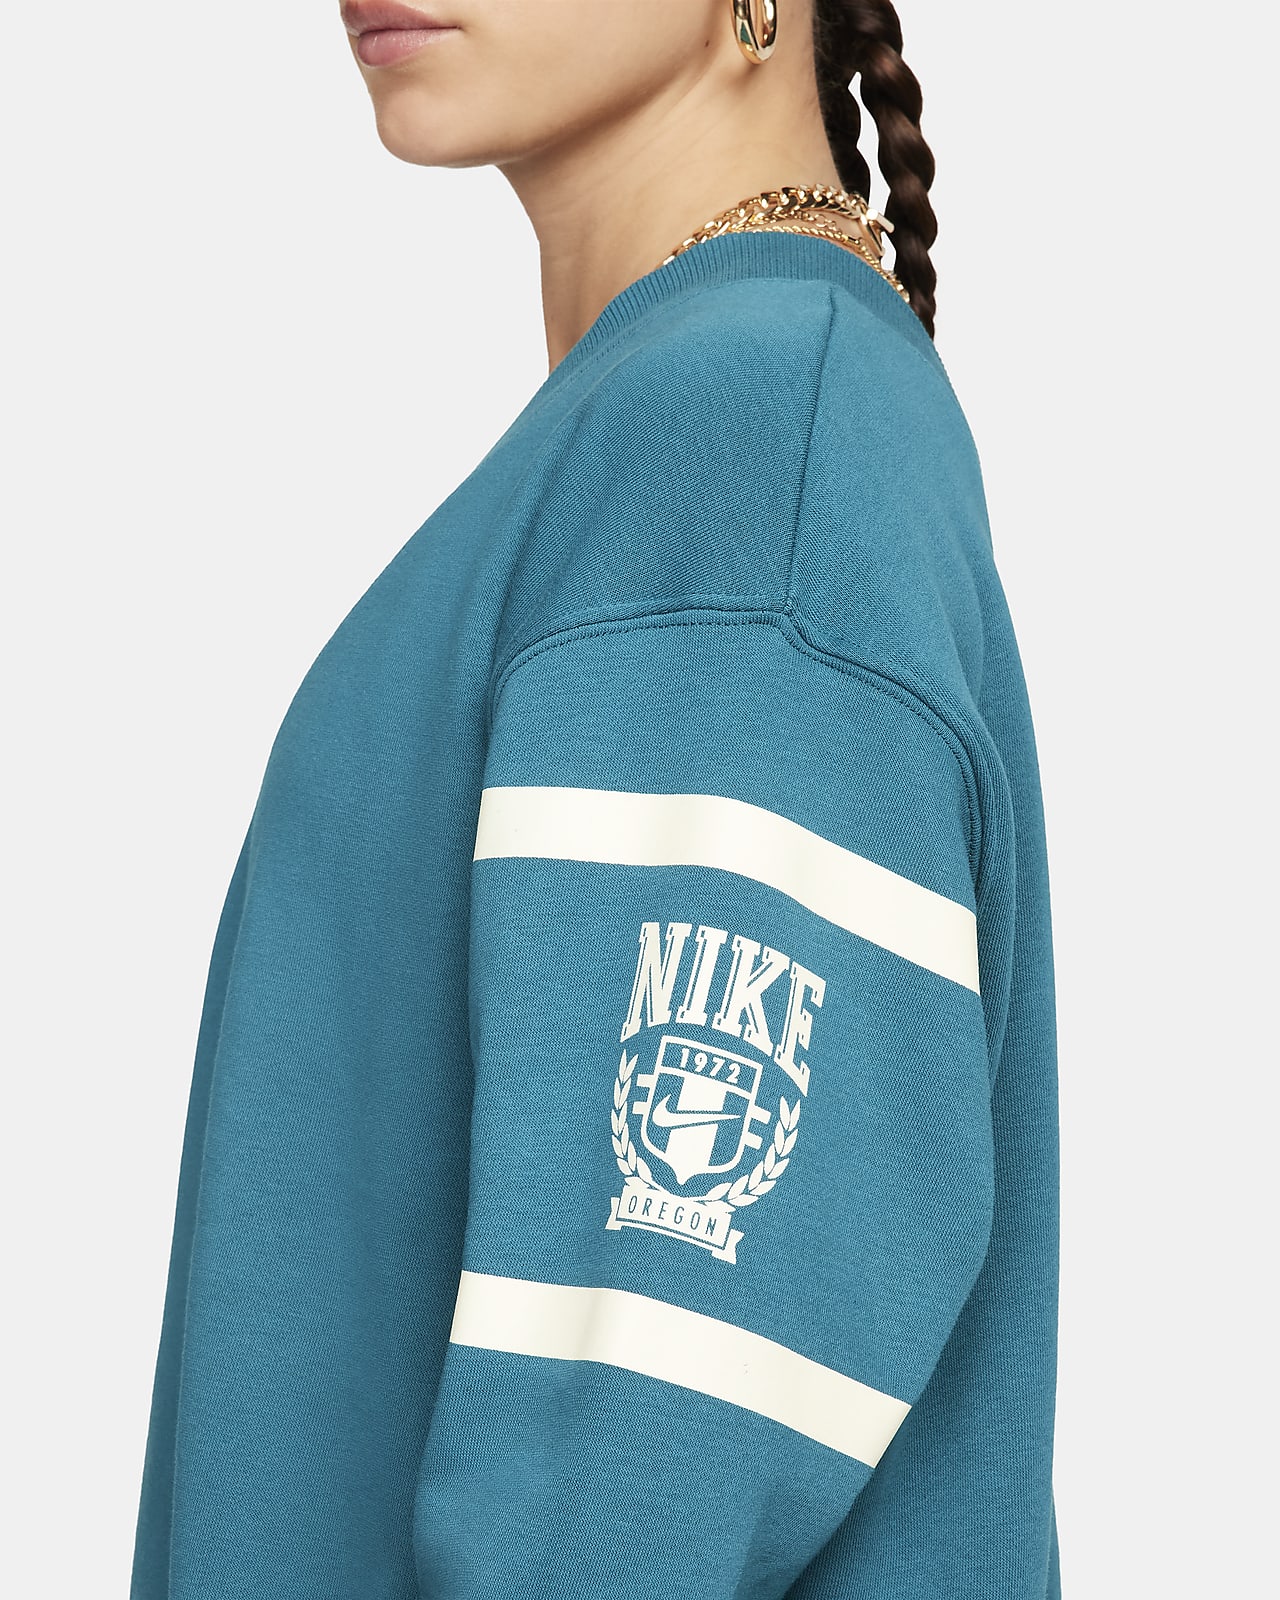 Sweat à capuche Femme Nike Sportswear Phoenix Fleece Bleu